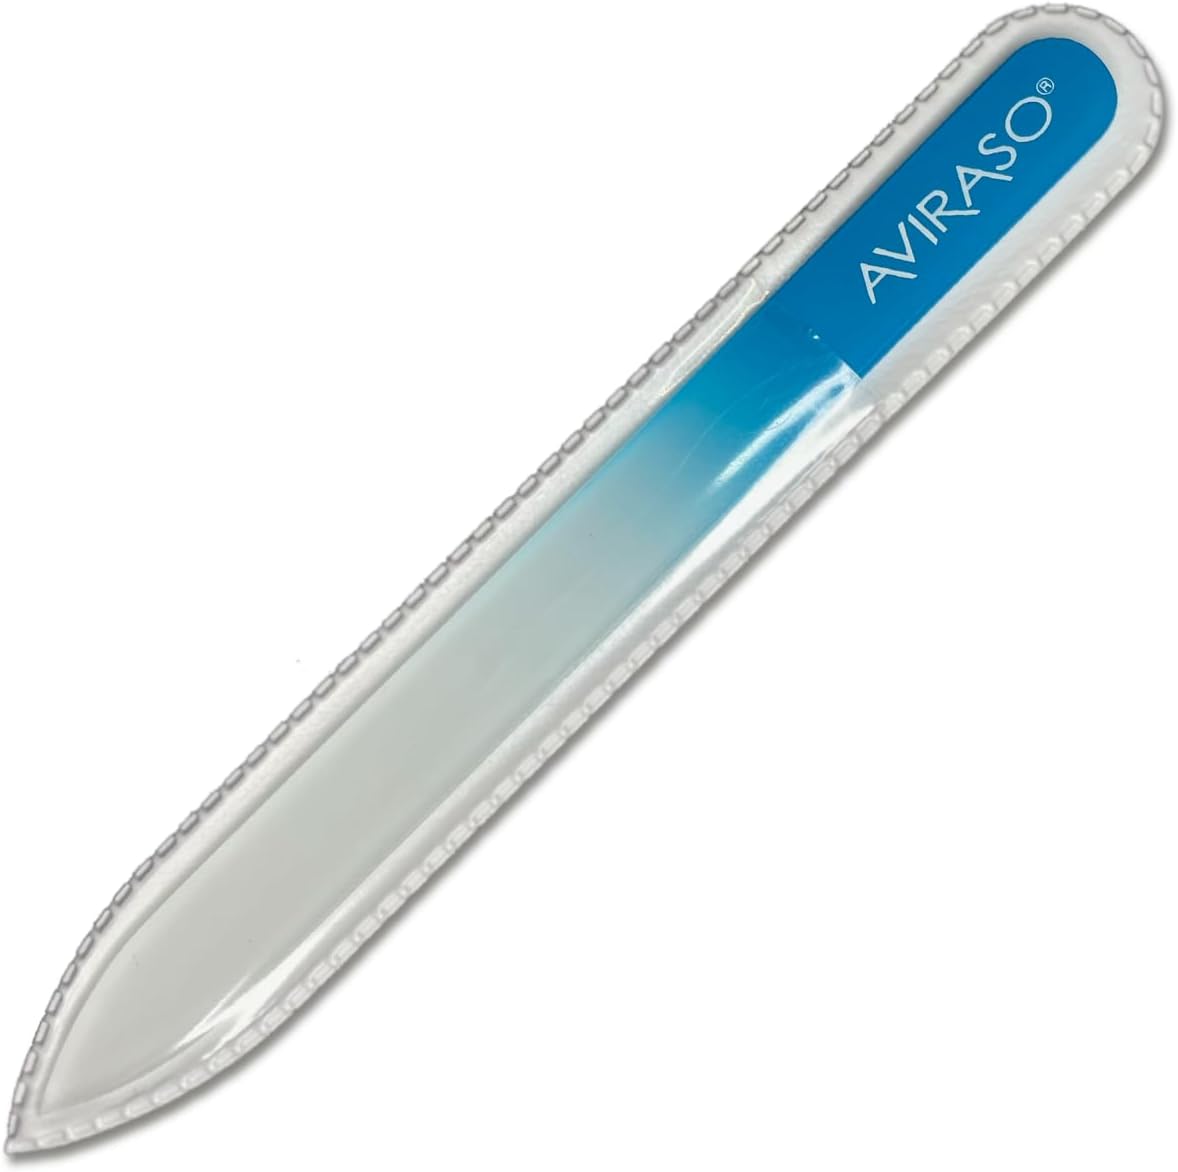 AVIRASO Original Premium Bohemia Crystal Glass Nail File for Nails 14 cm - Manicure - Gentle Precision Files - Smooths Nails (Light Blue)